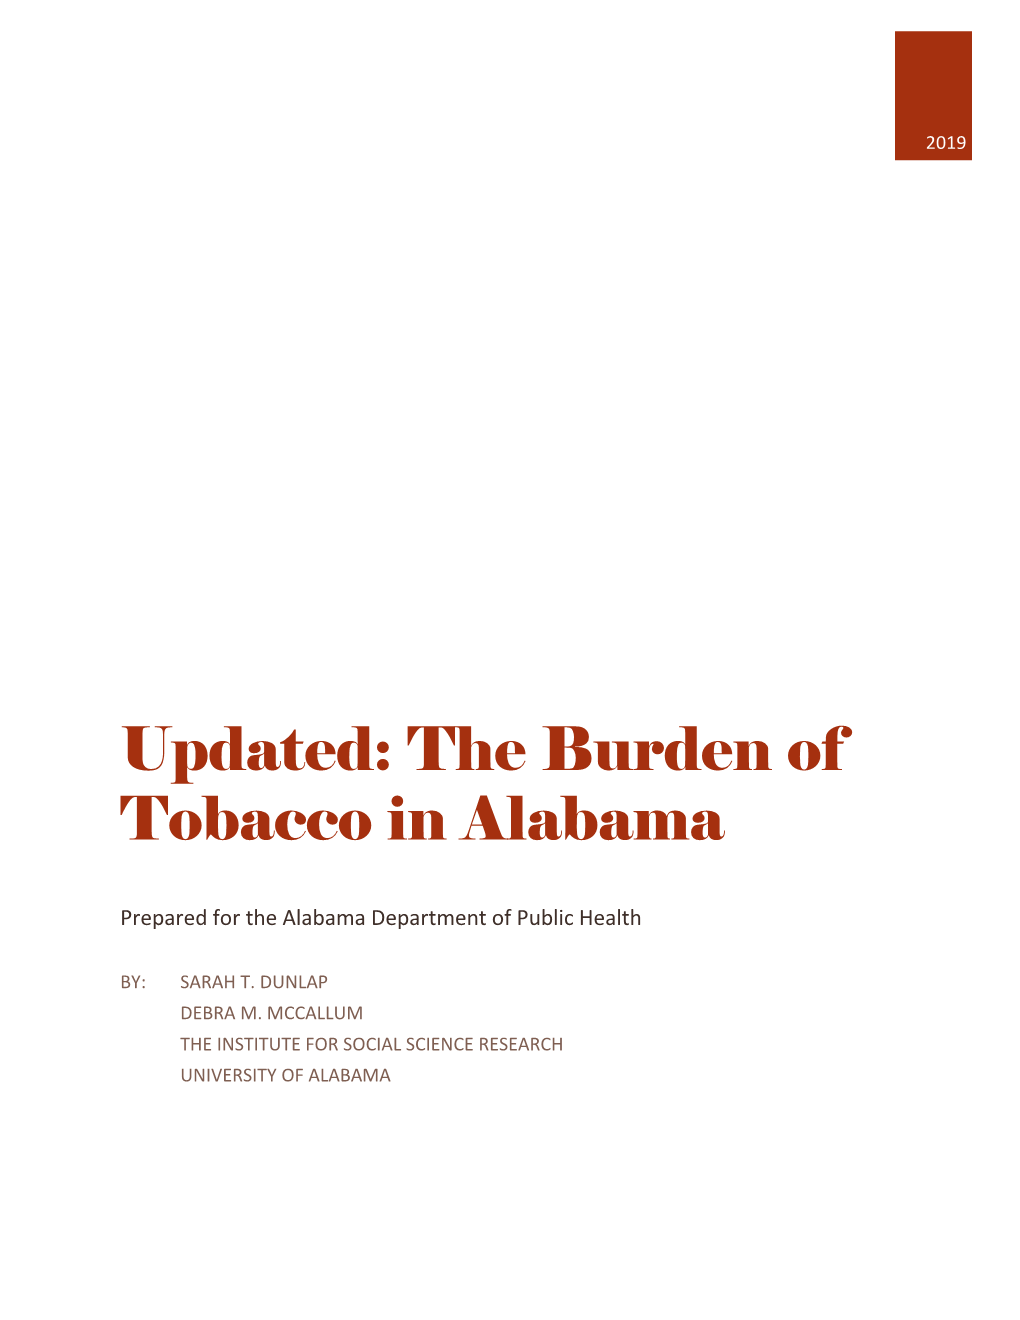 The Burden of Tobacco in Alabama 2019